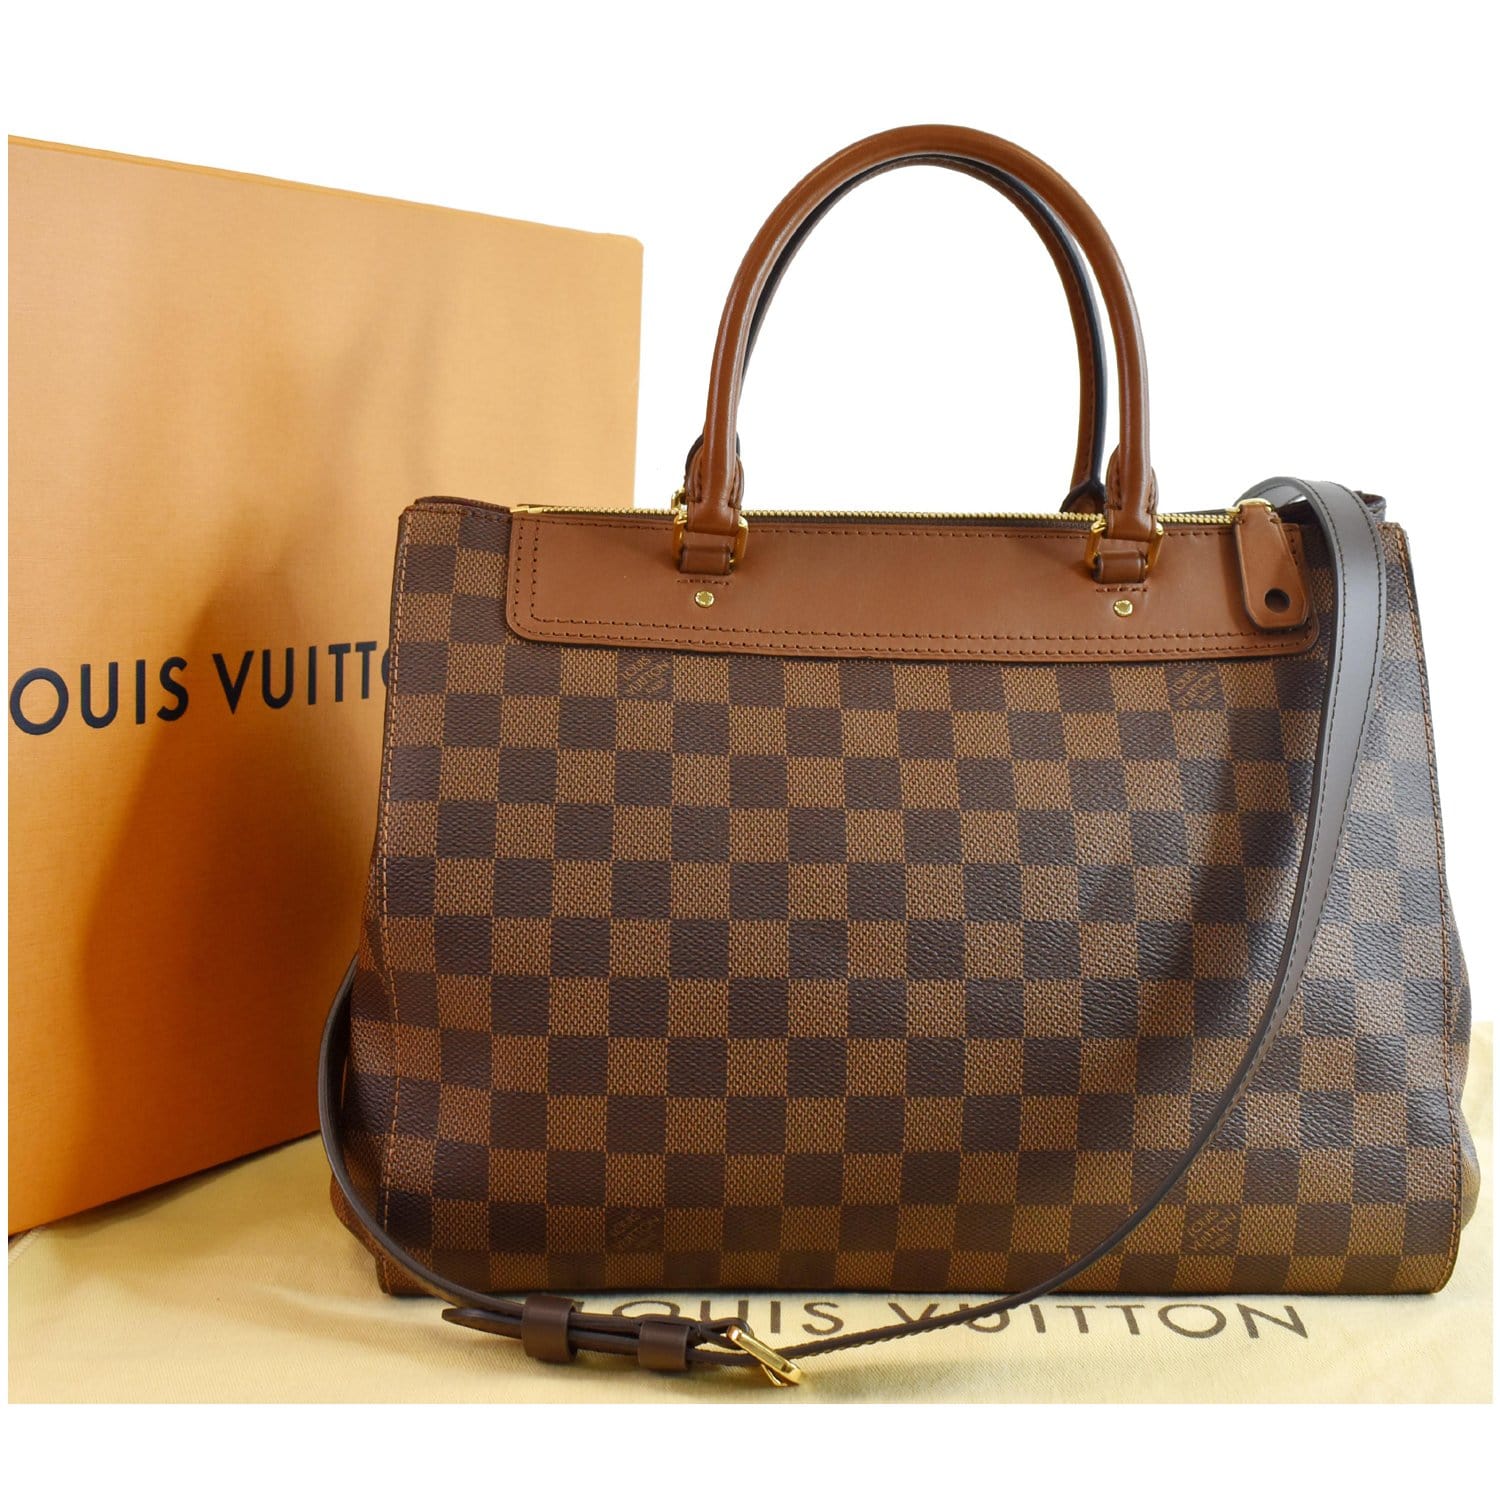 Louis Vuitton Greenwich Damier Ebene Top Handle Bag on SALE